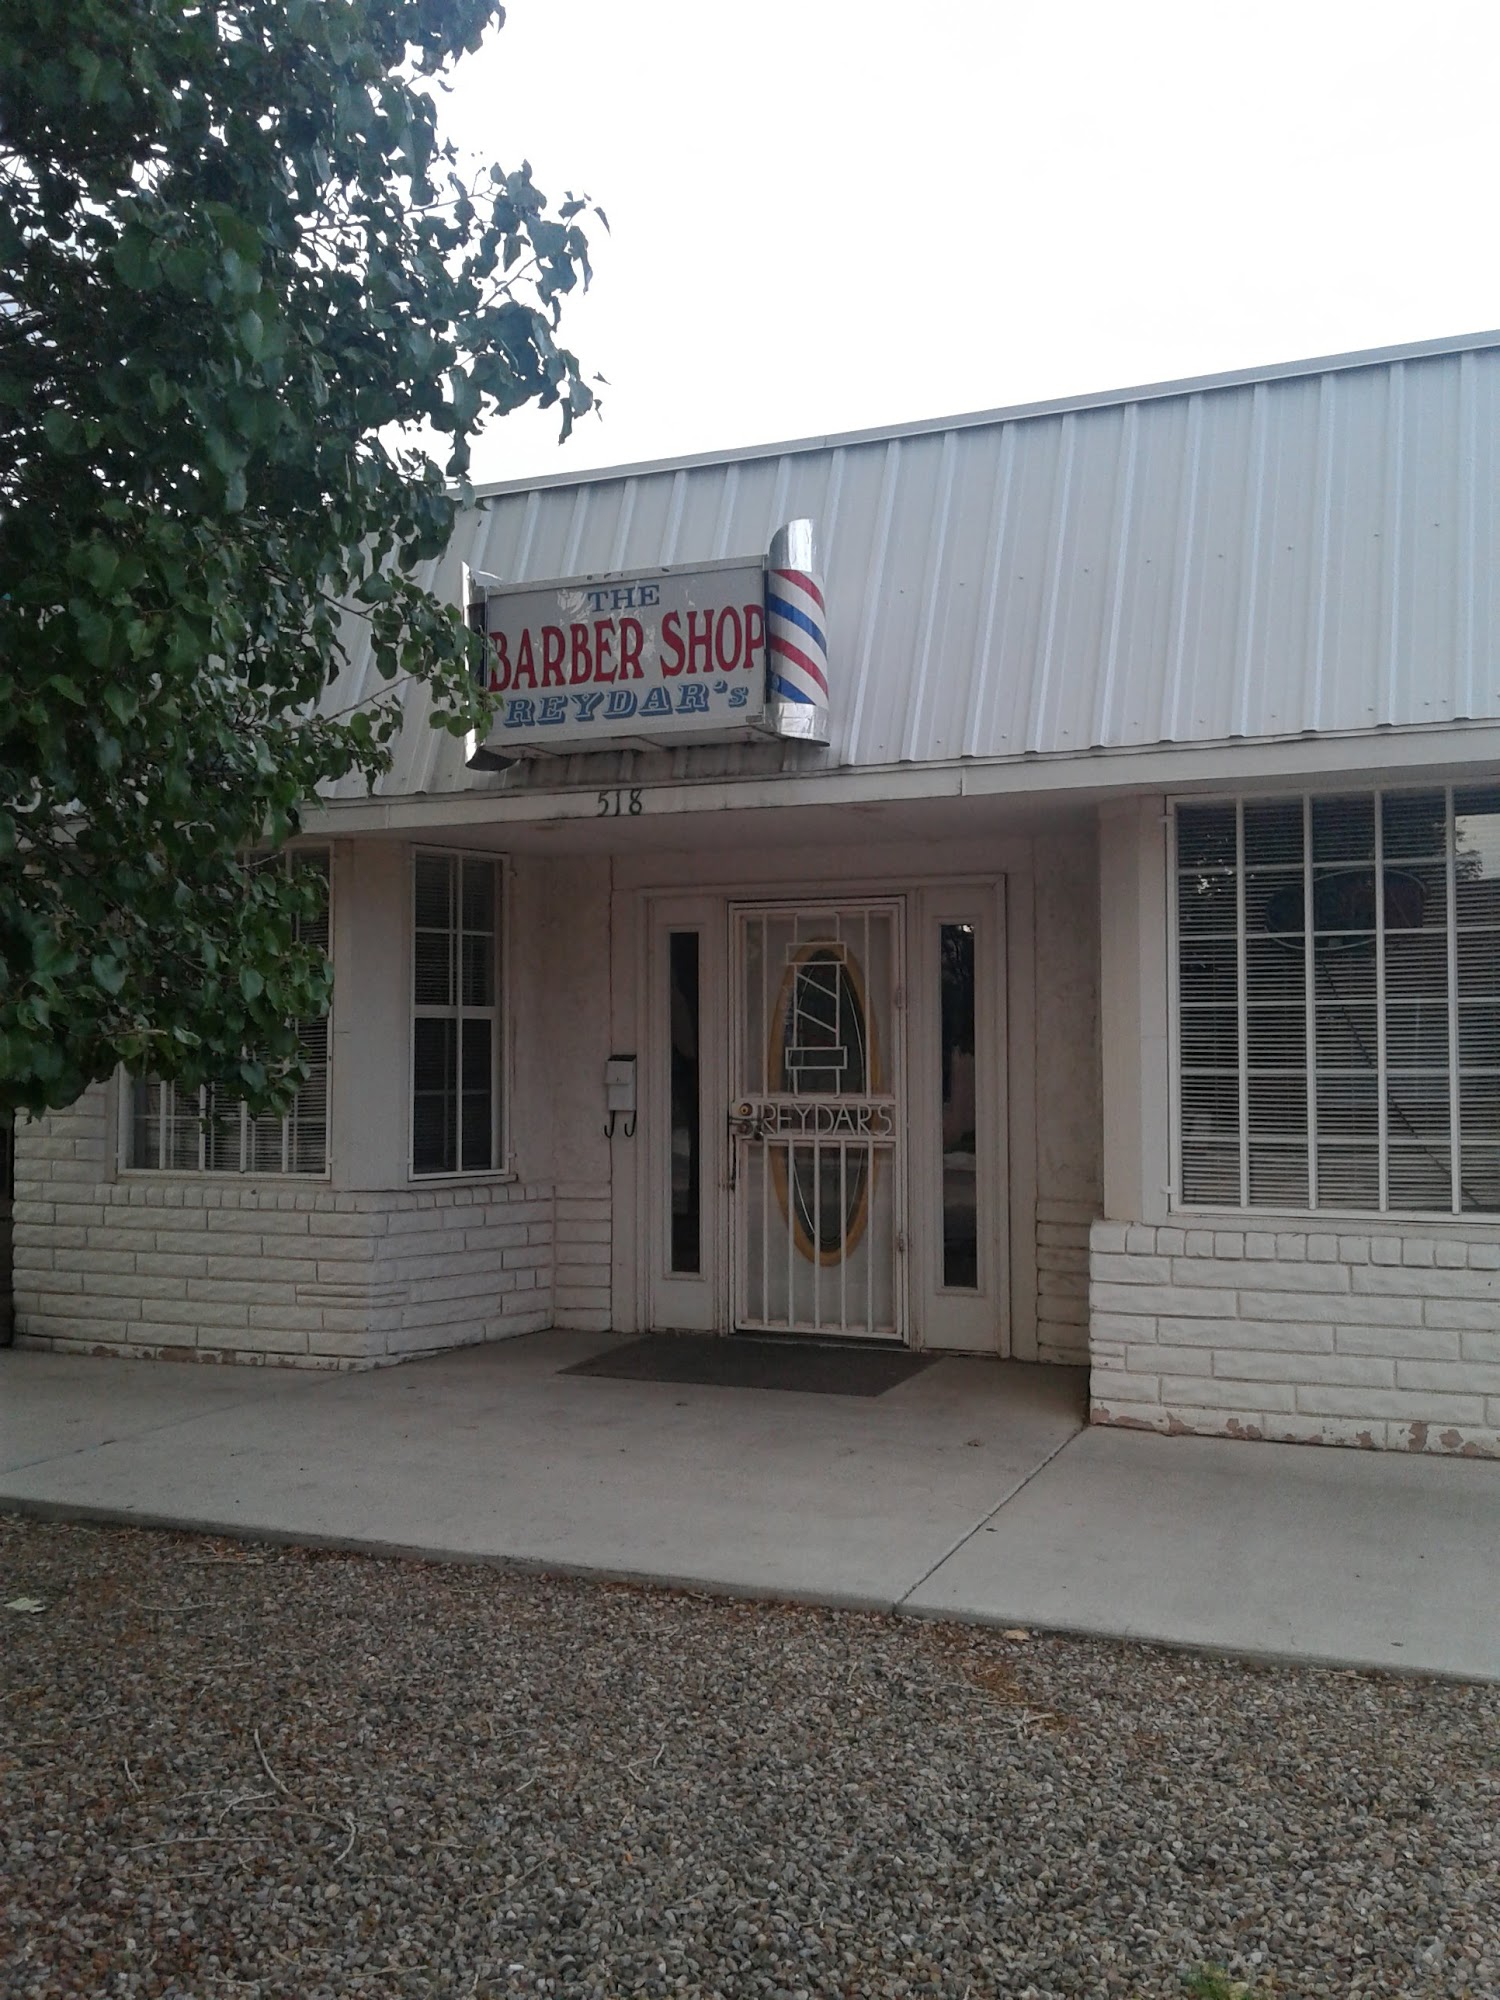 Reydar's Barber Shop 518 Becker Ave, Belen New Mexico 87002